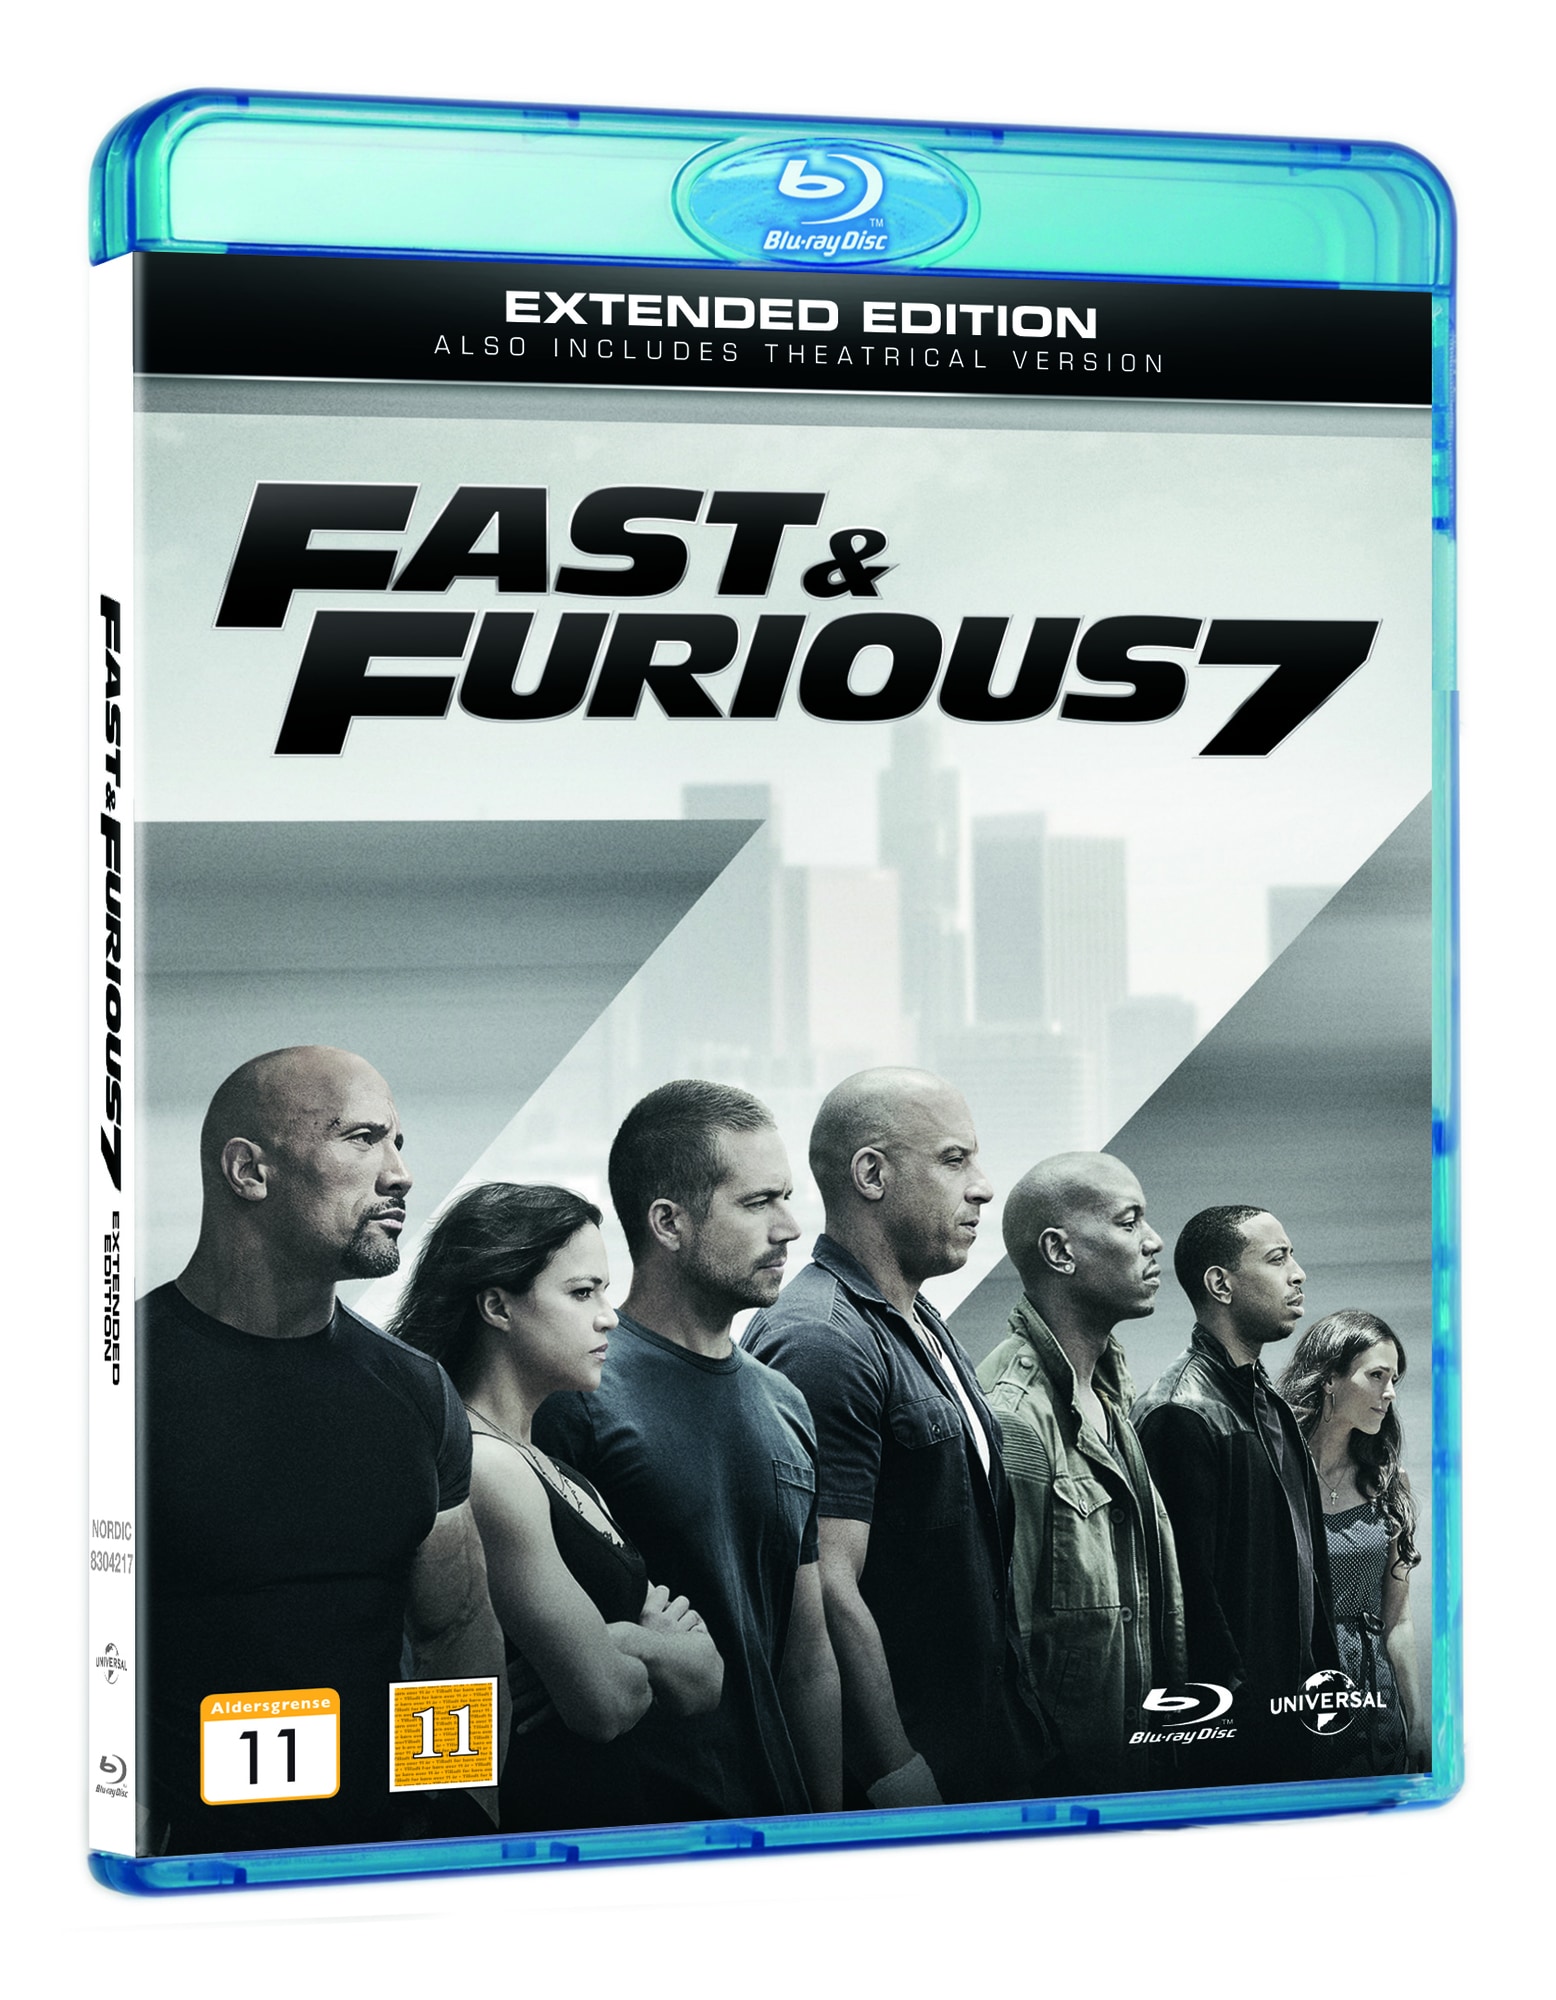 Fast & furious 7 (blu-ray)